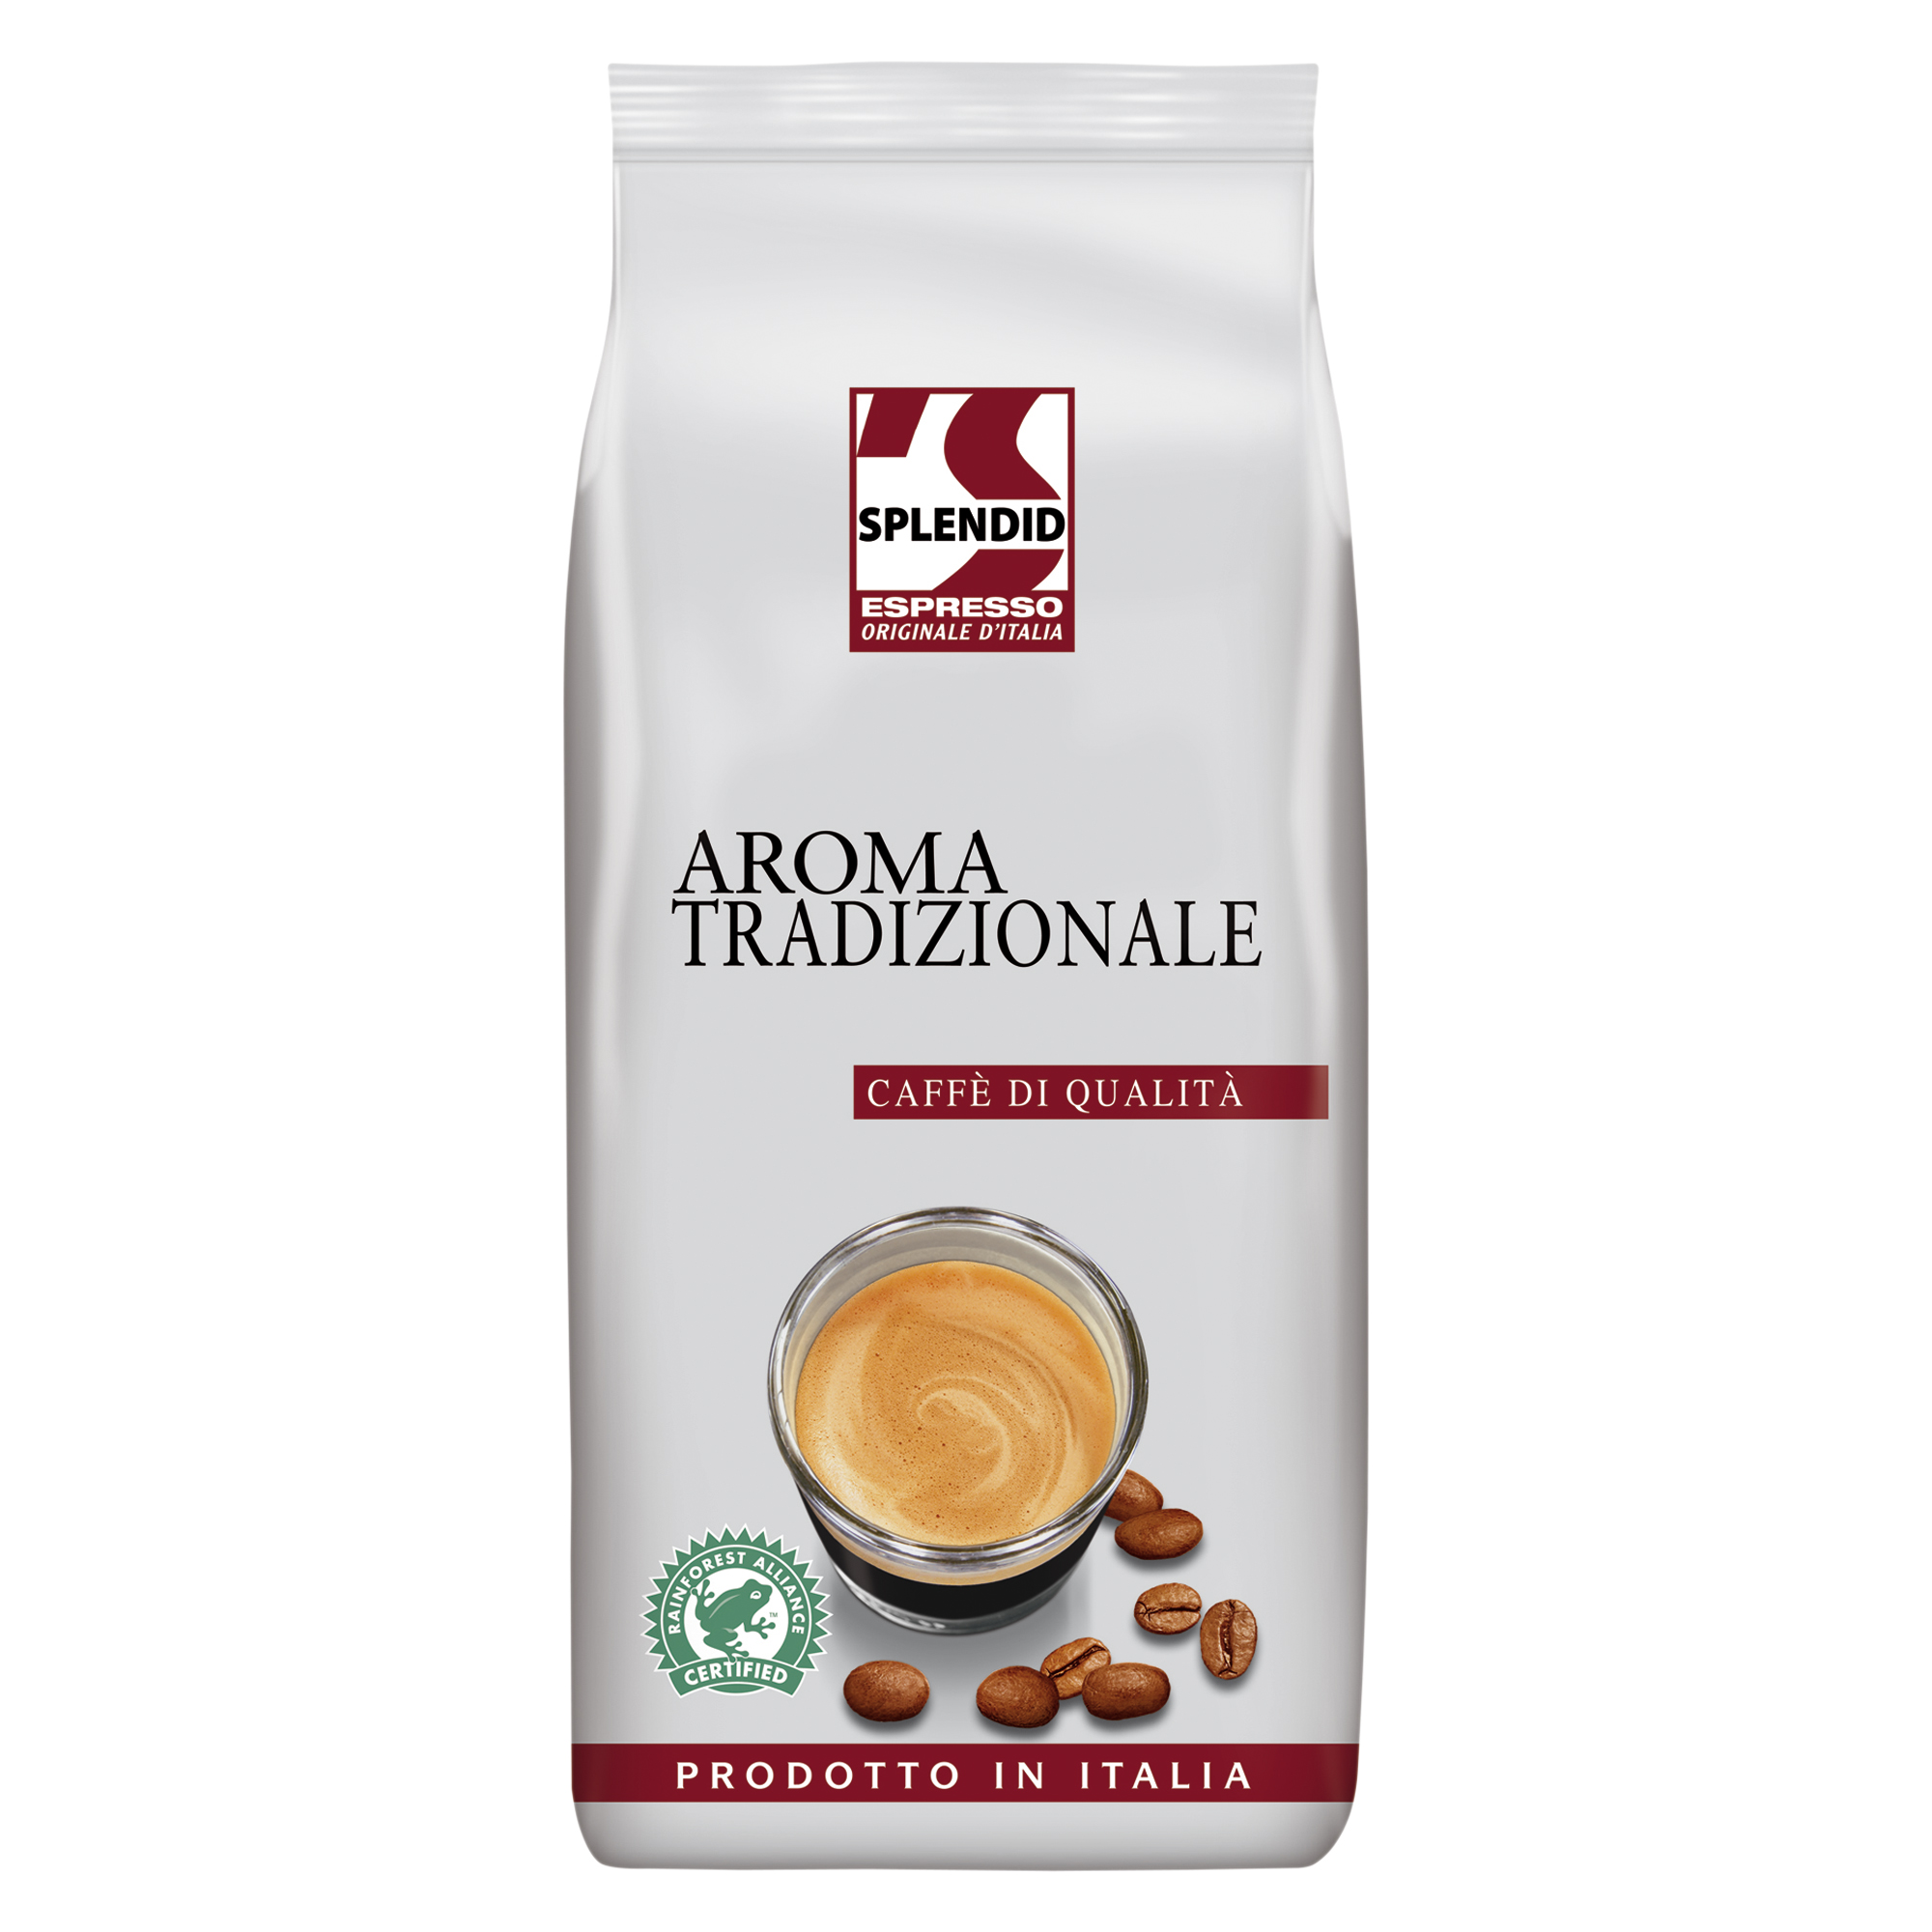 SPLENDID Espresso Aroma Traditionale